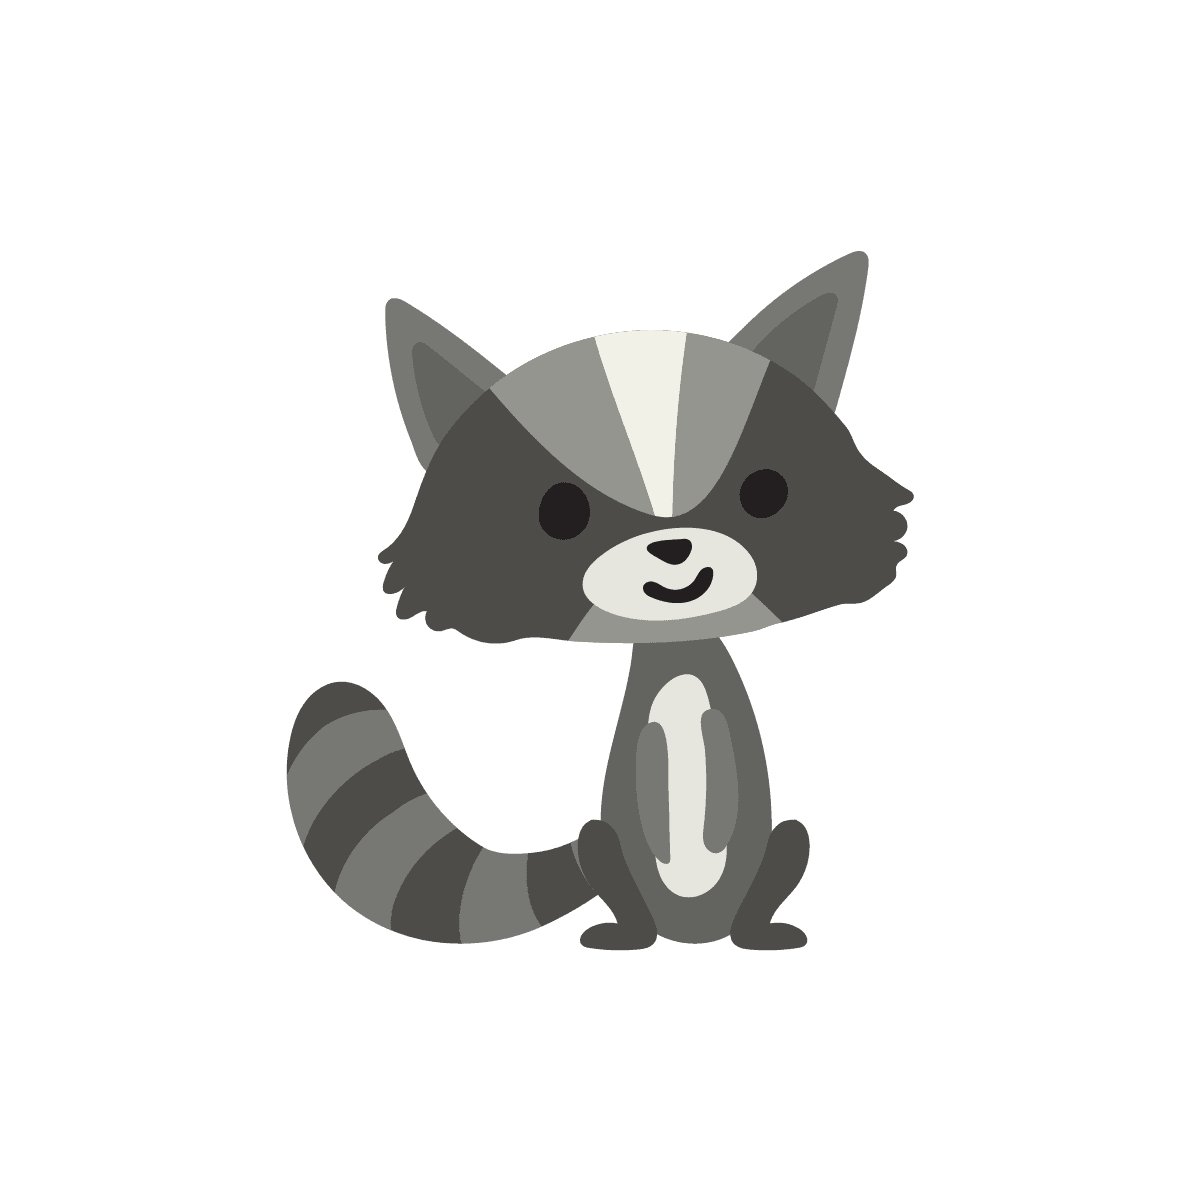 cute raccoon illustration for children’s books